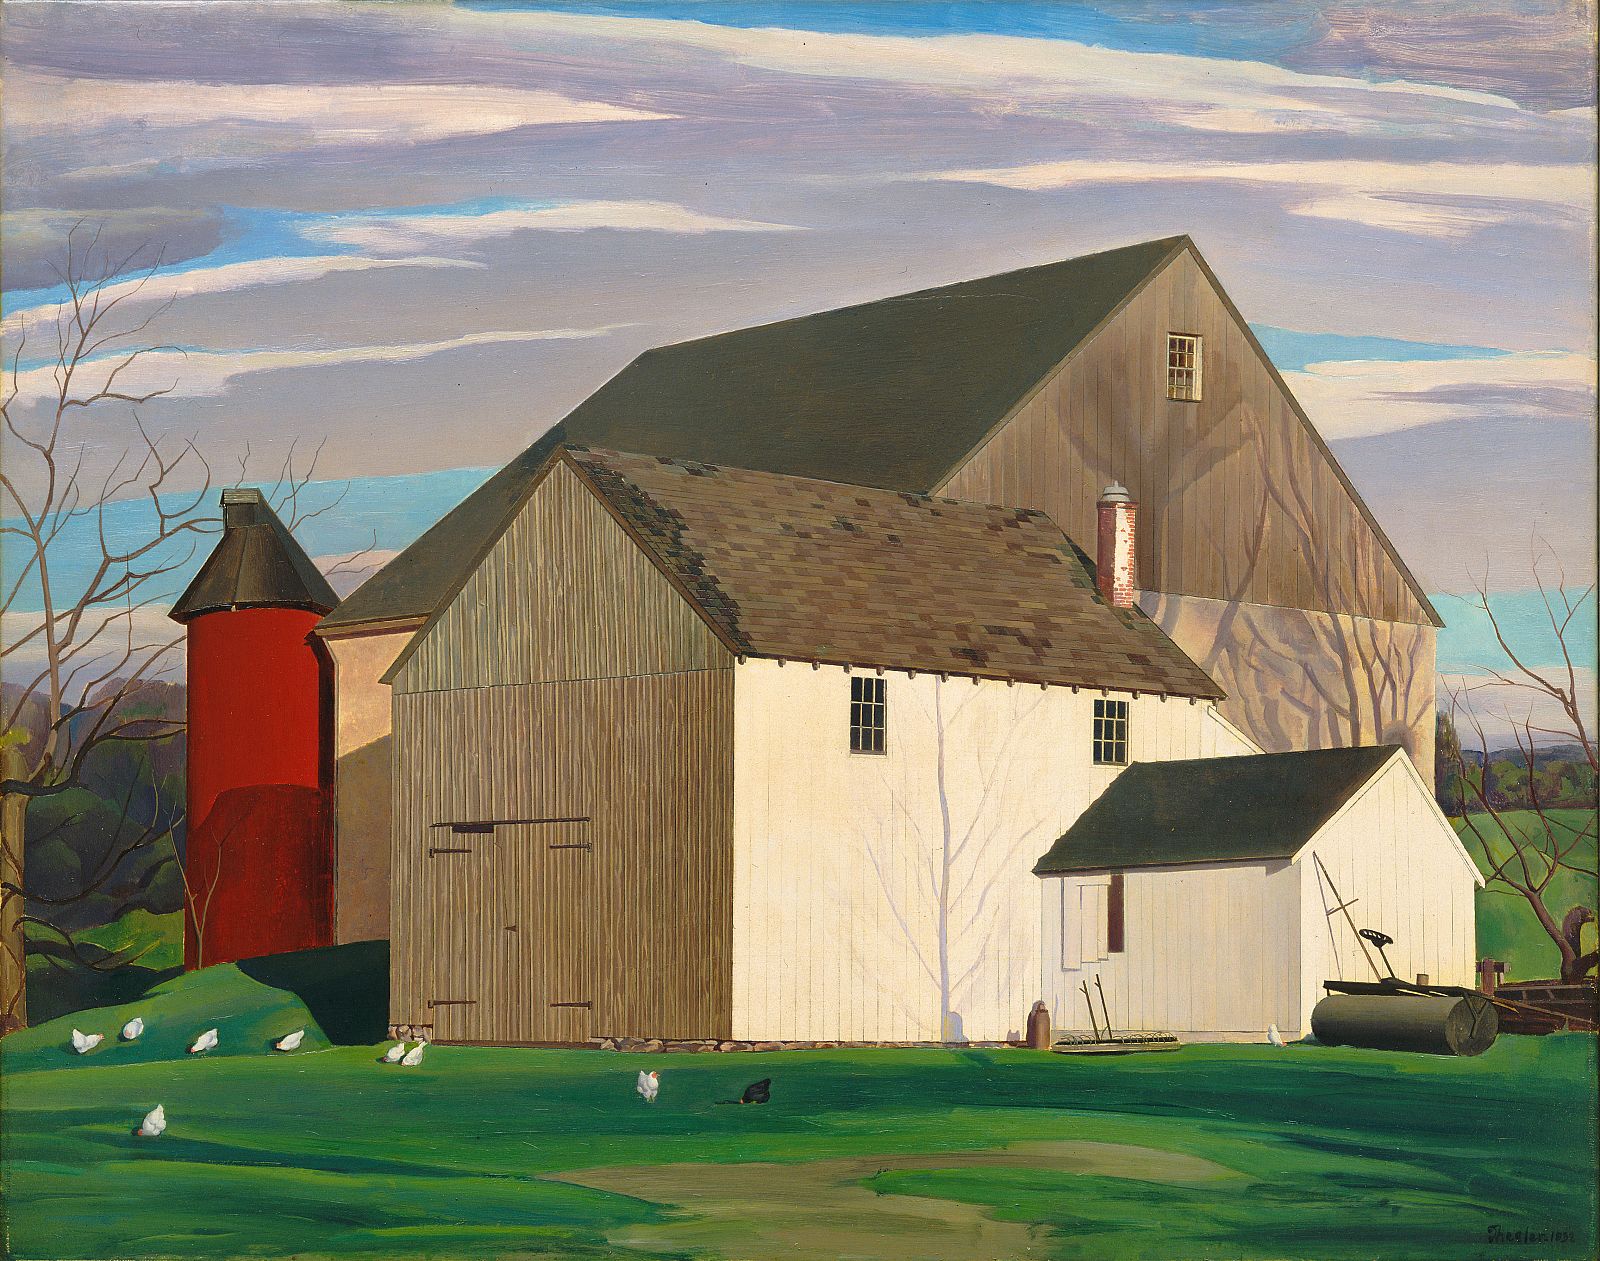 'Bucks County Barn' (1932). Charles Sheeler.